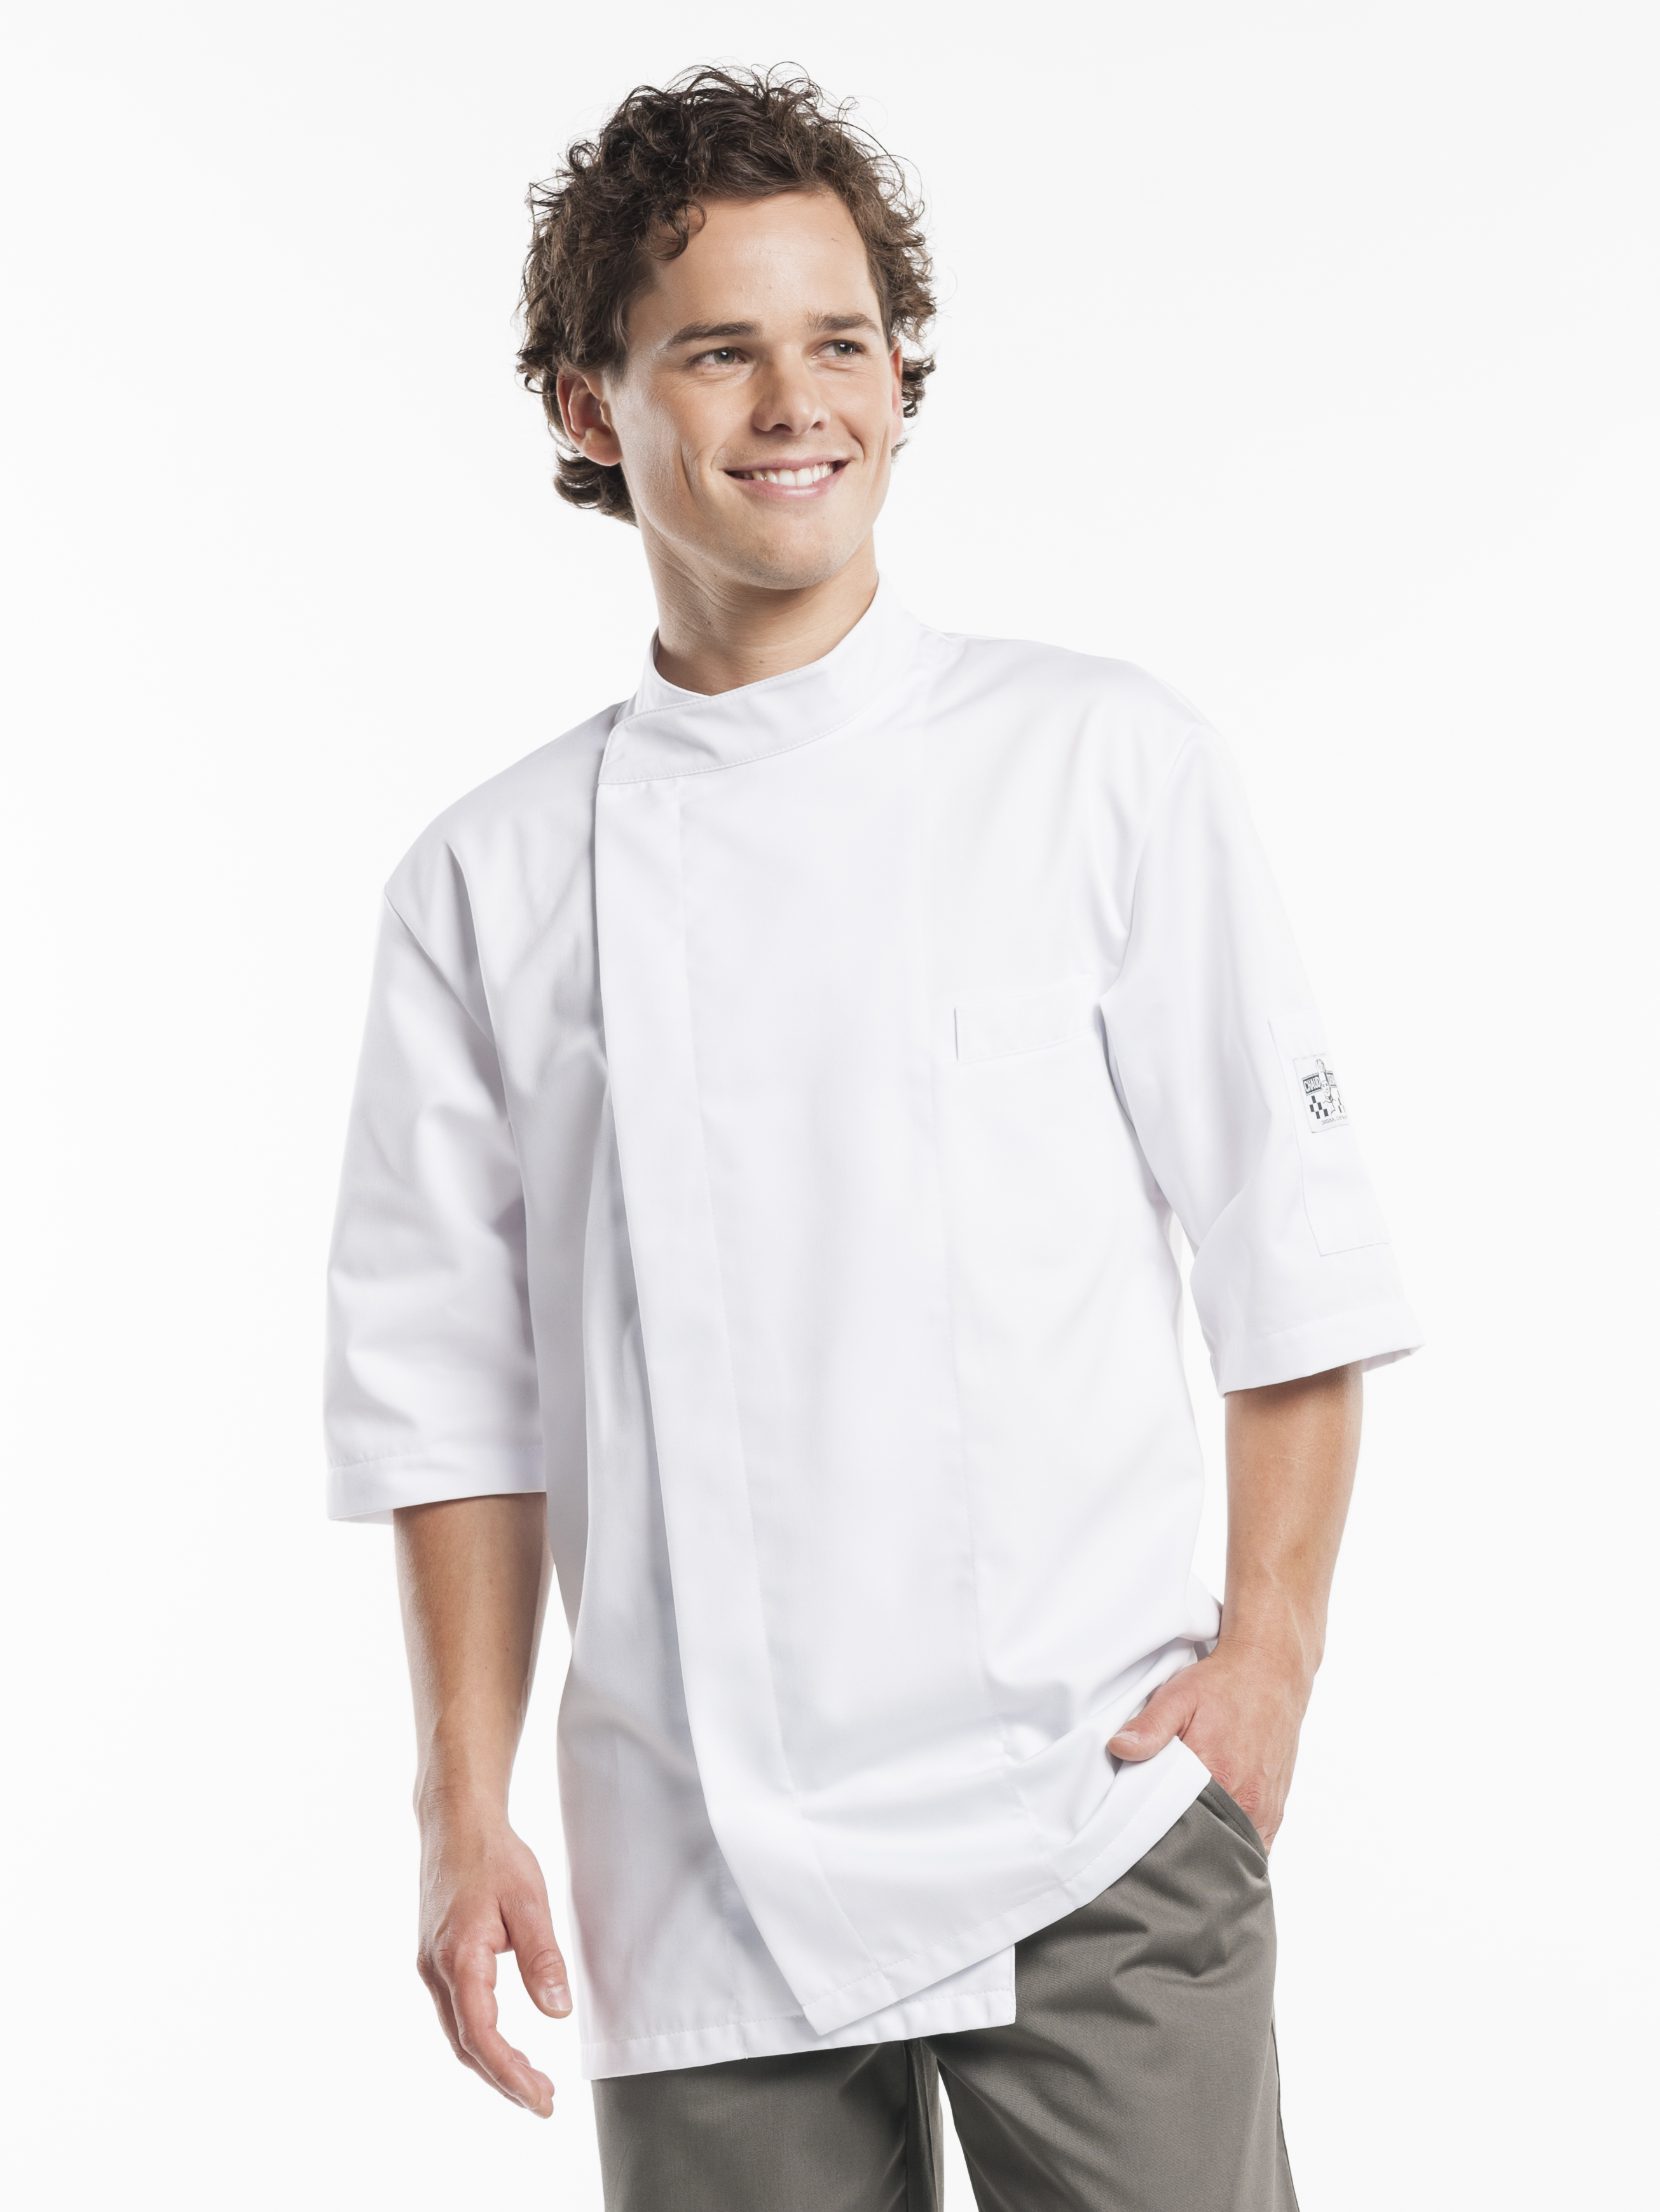 Chef Jacket Bacio White Short Sleeve